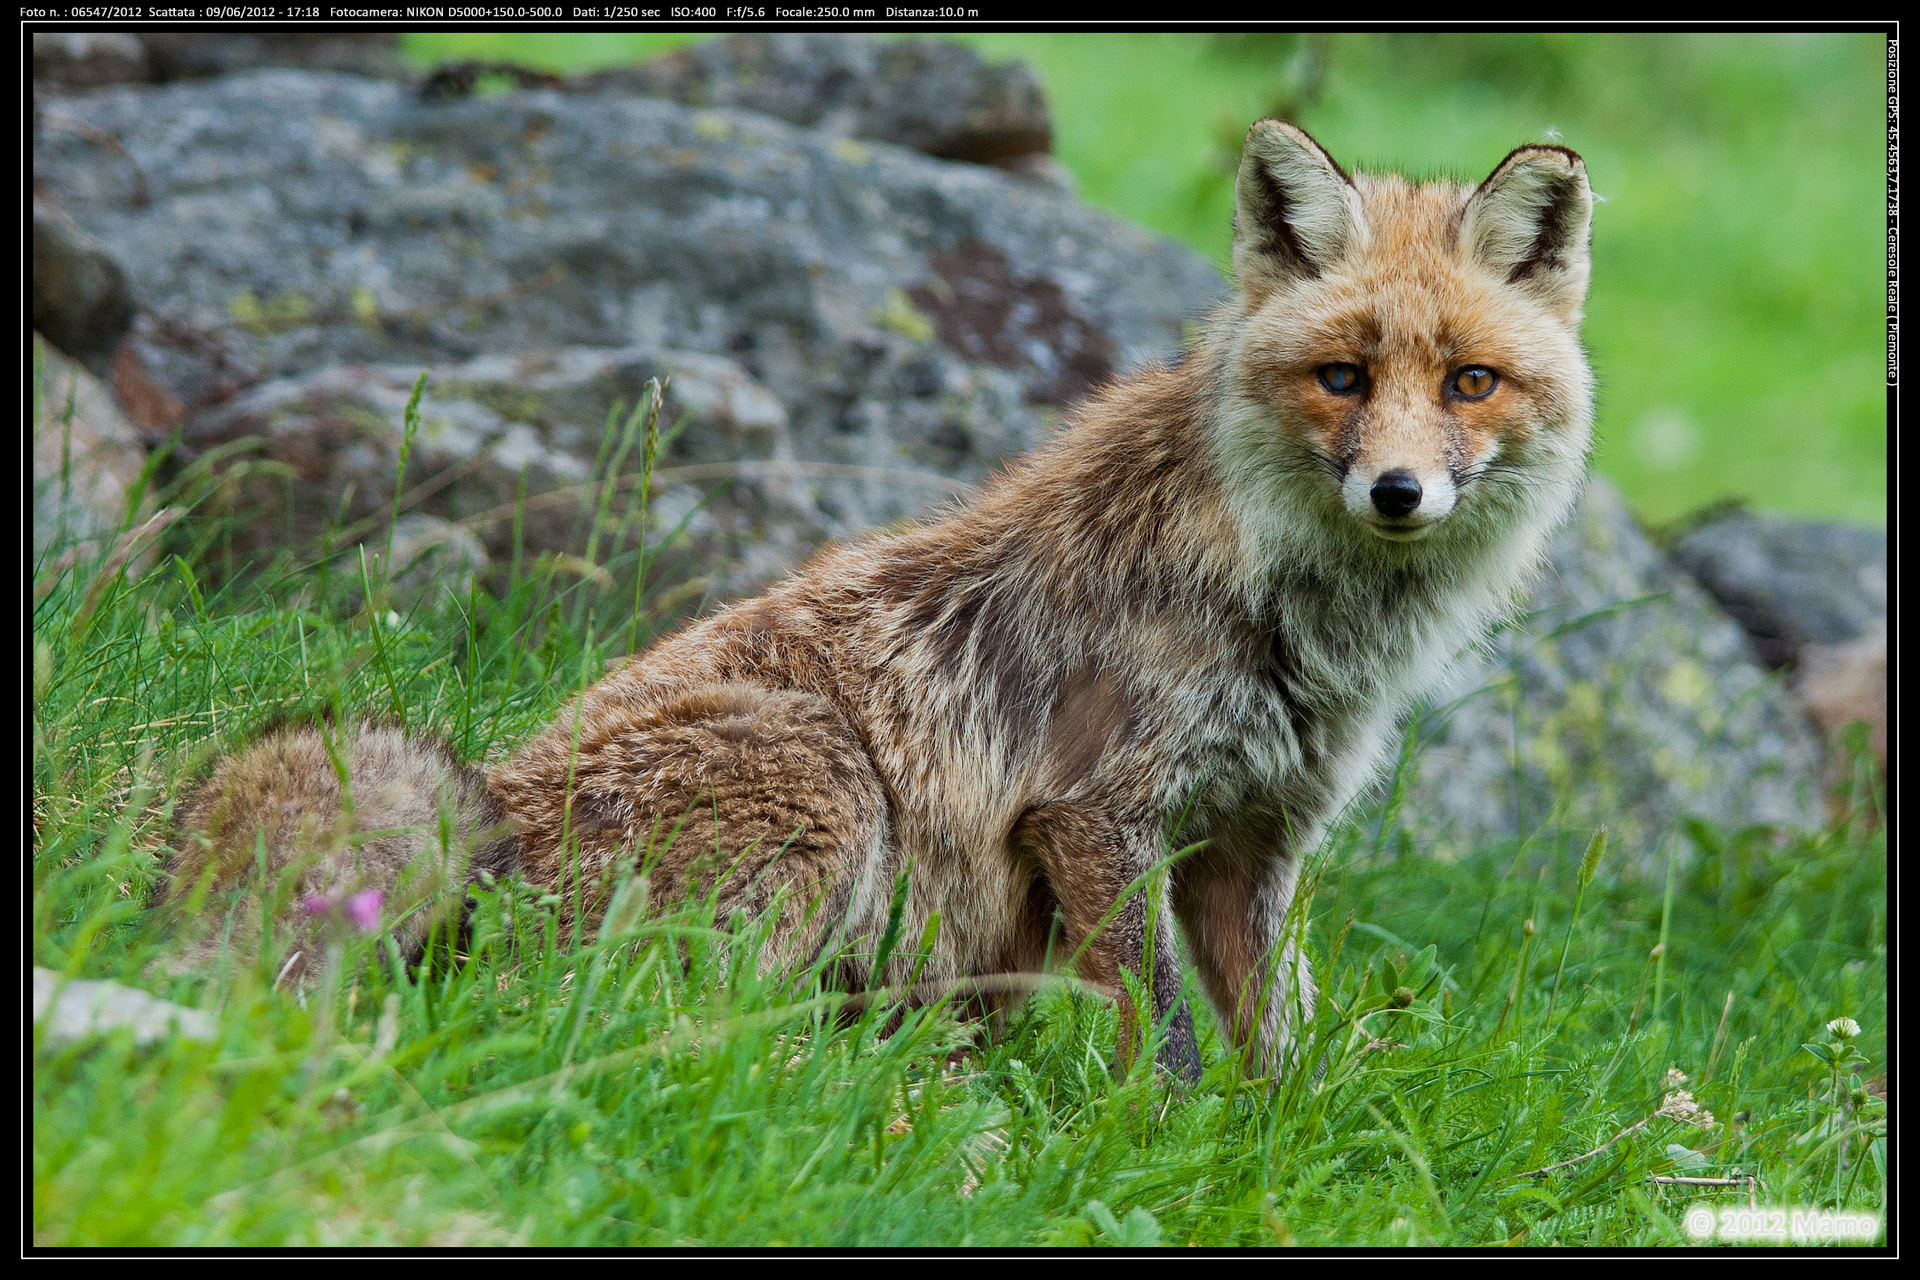 Fox Ceresole Reale...